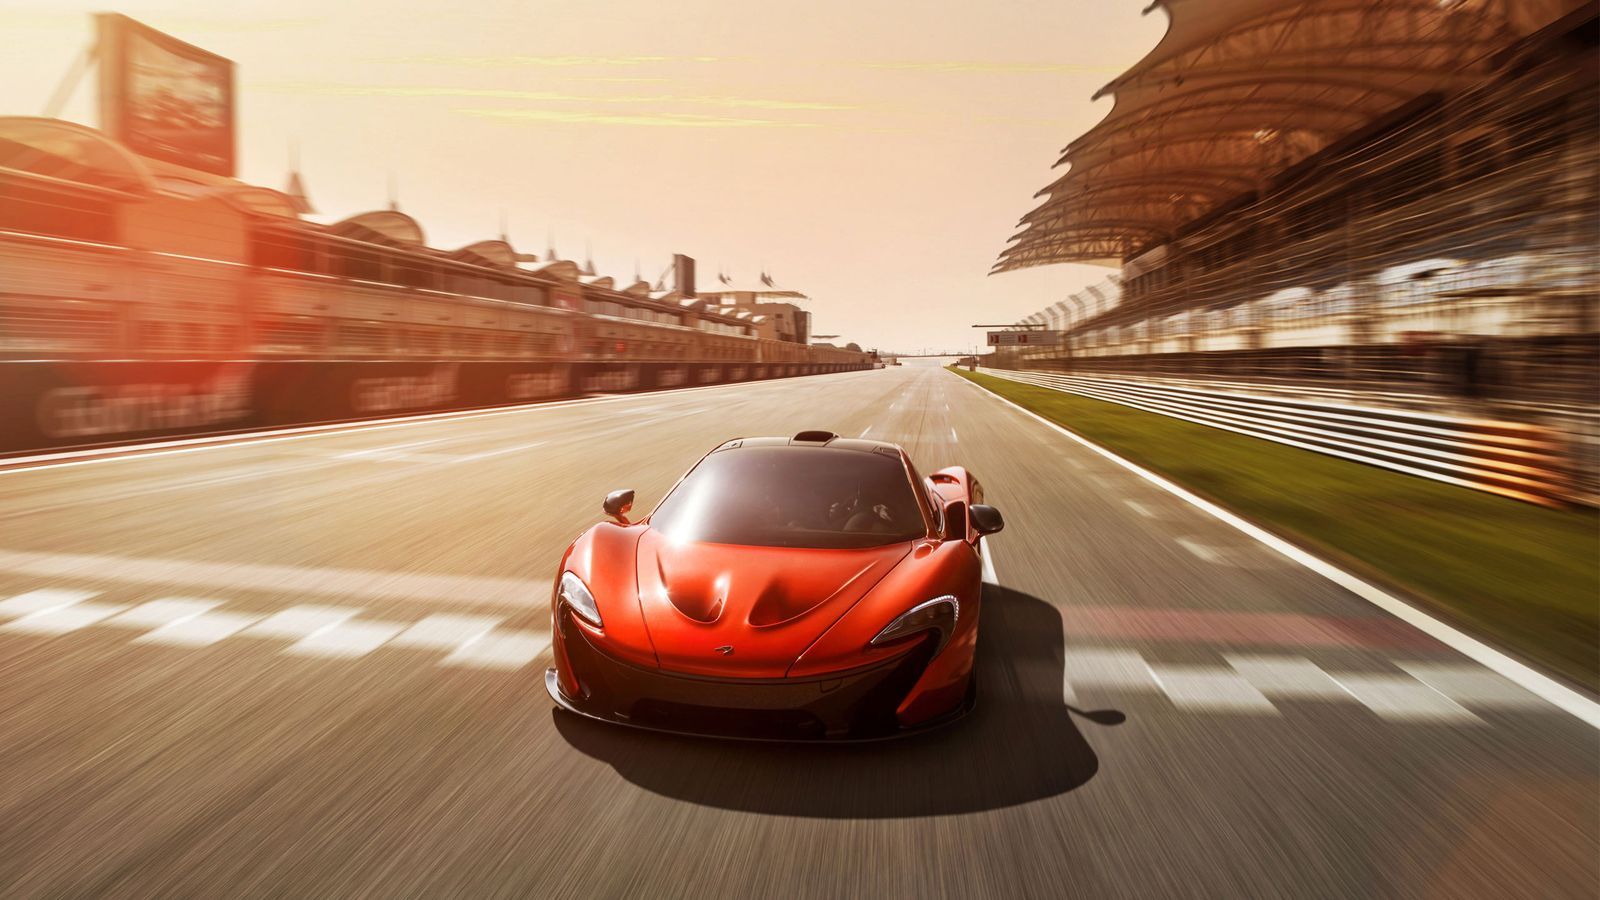 McLaren supercar wallpaper download 49690 - Automotive Wallpapers ...